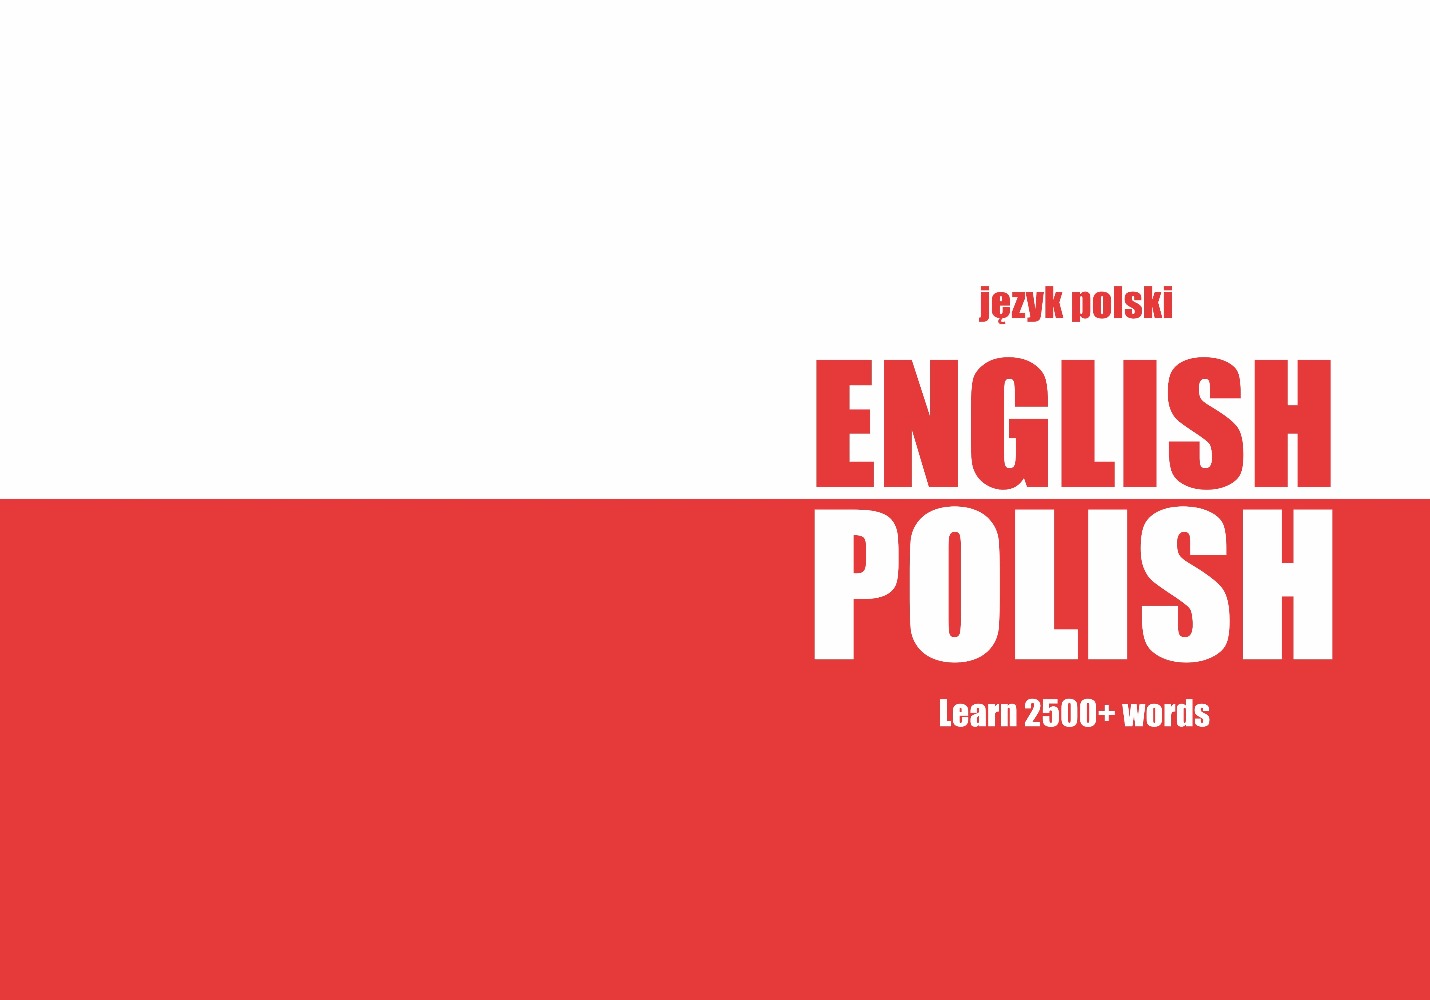 Polish language learning notebook cover